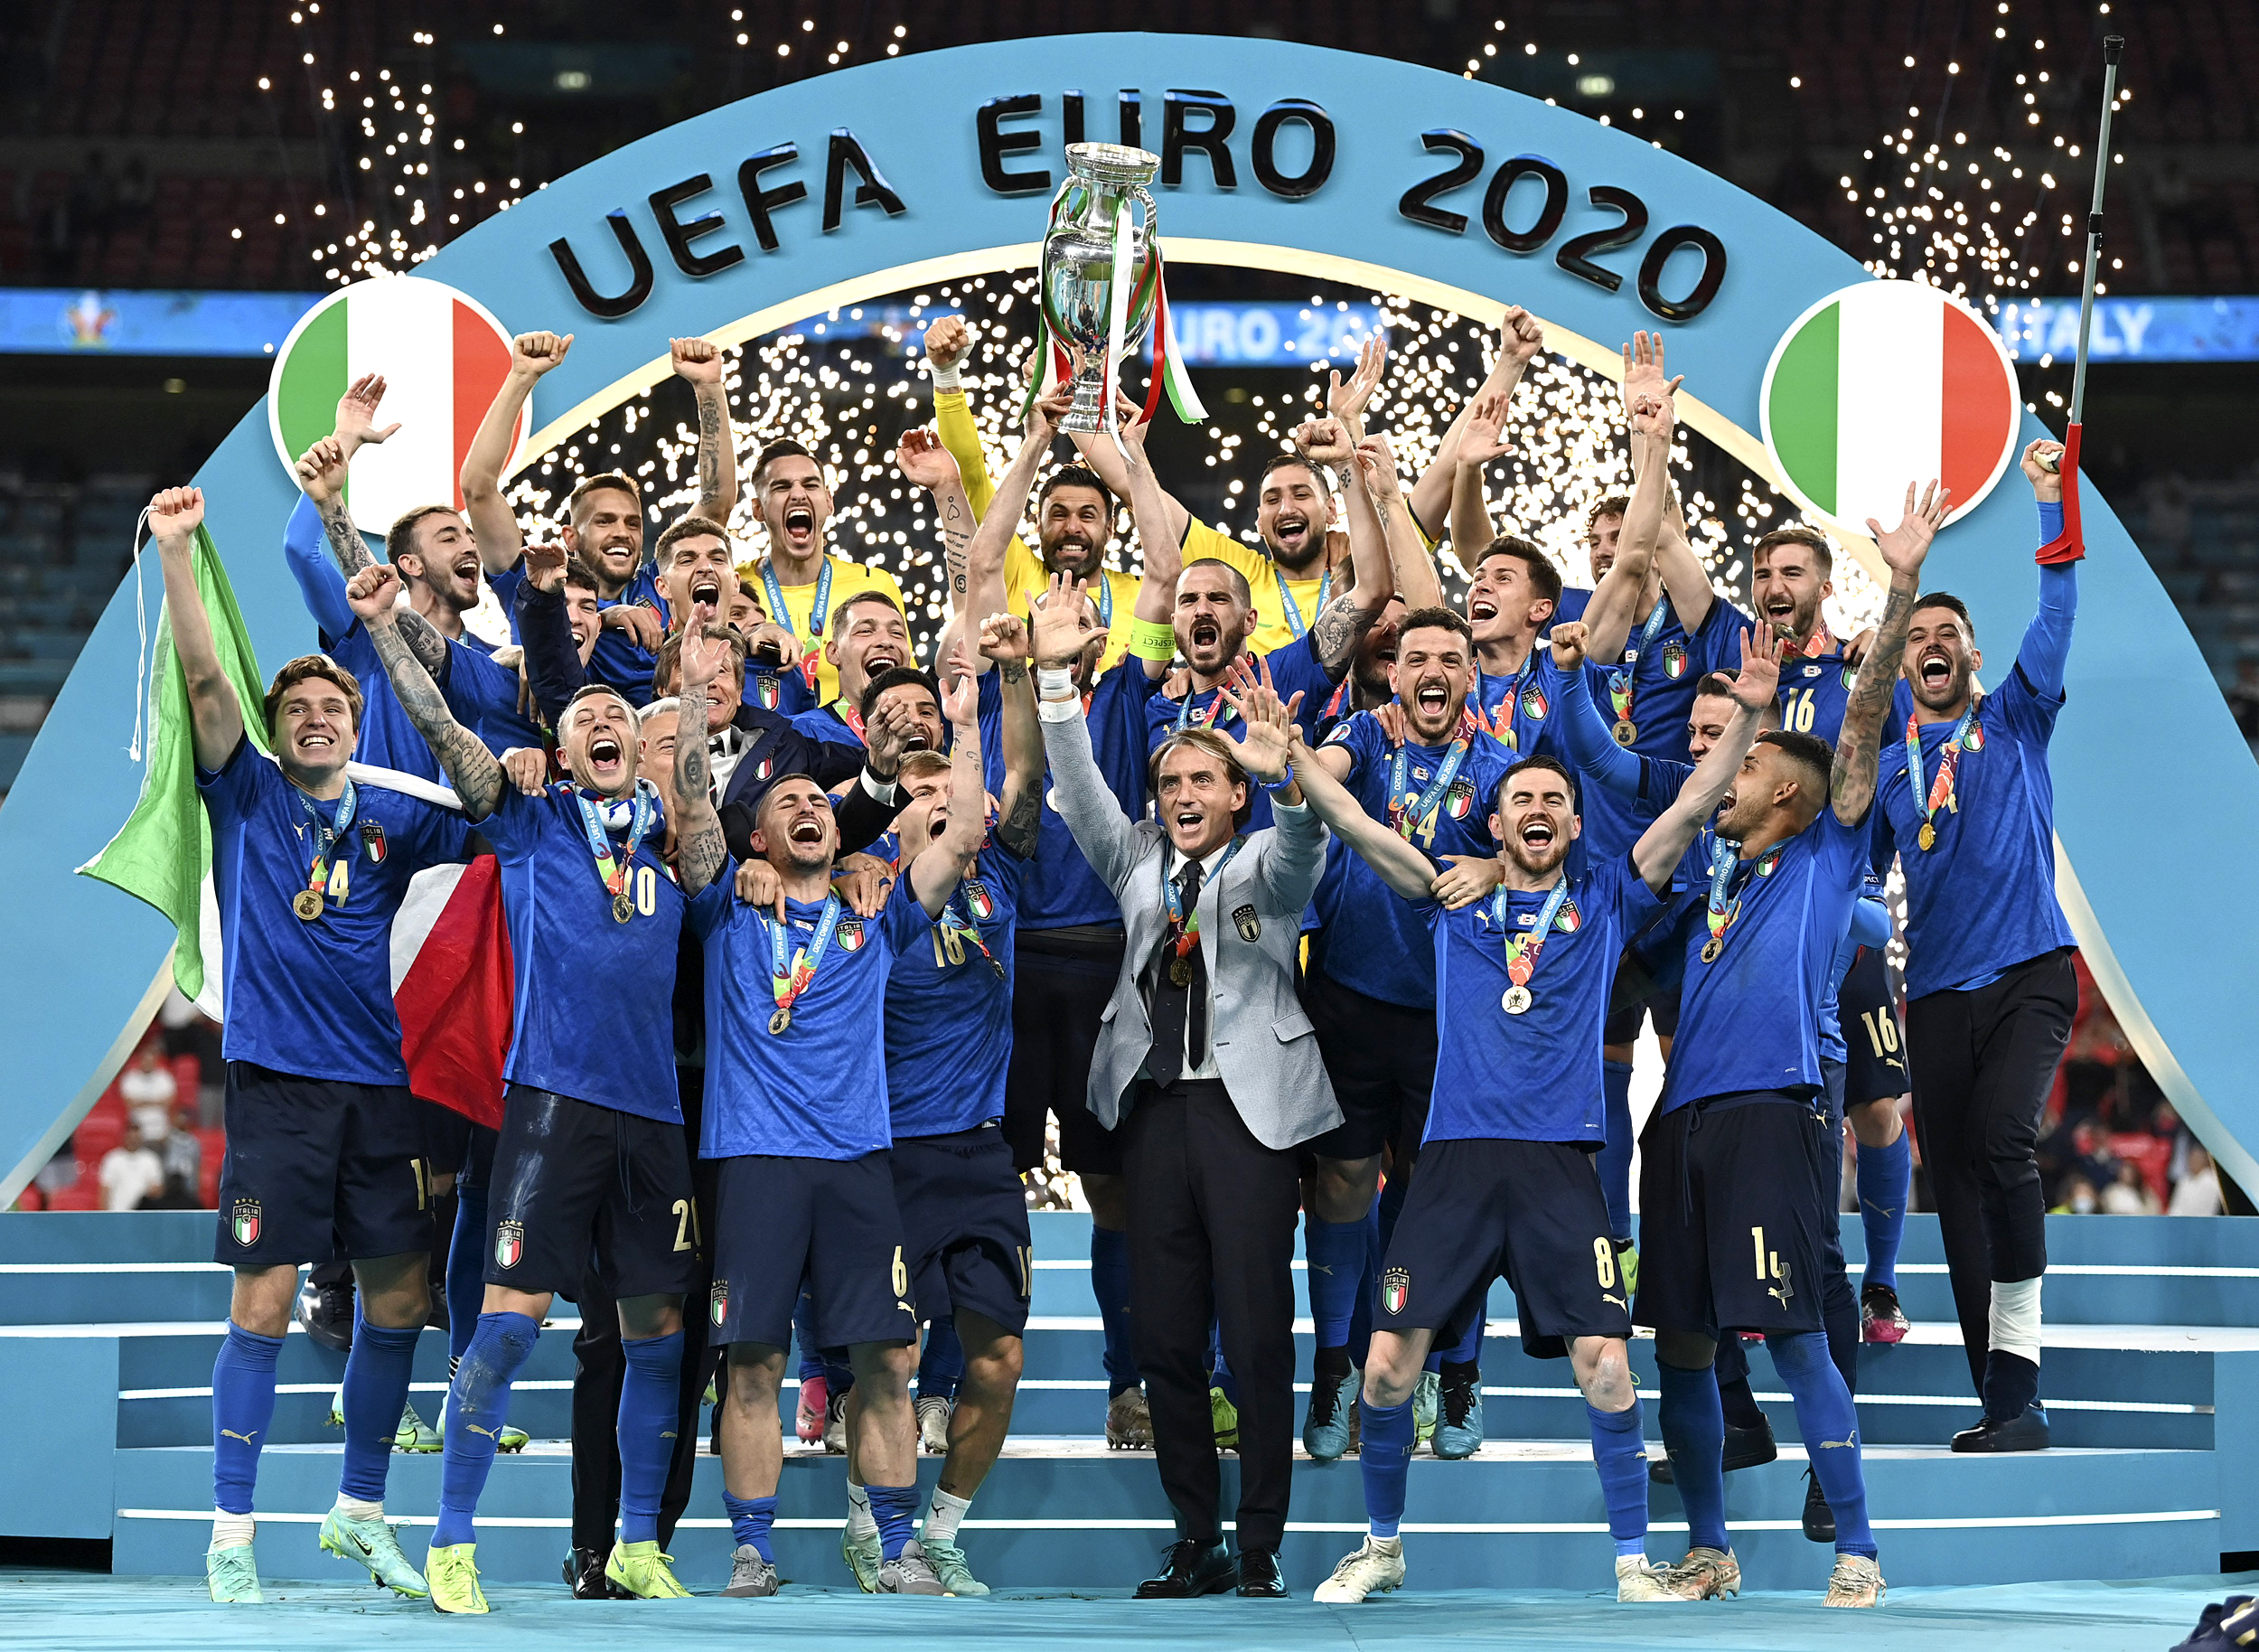 UEFA EURO 2020 Winner, ITALY